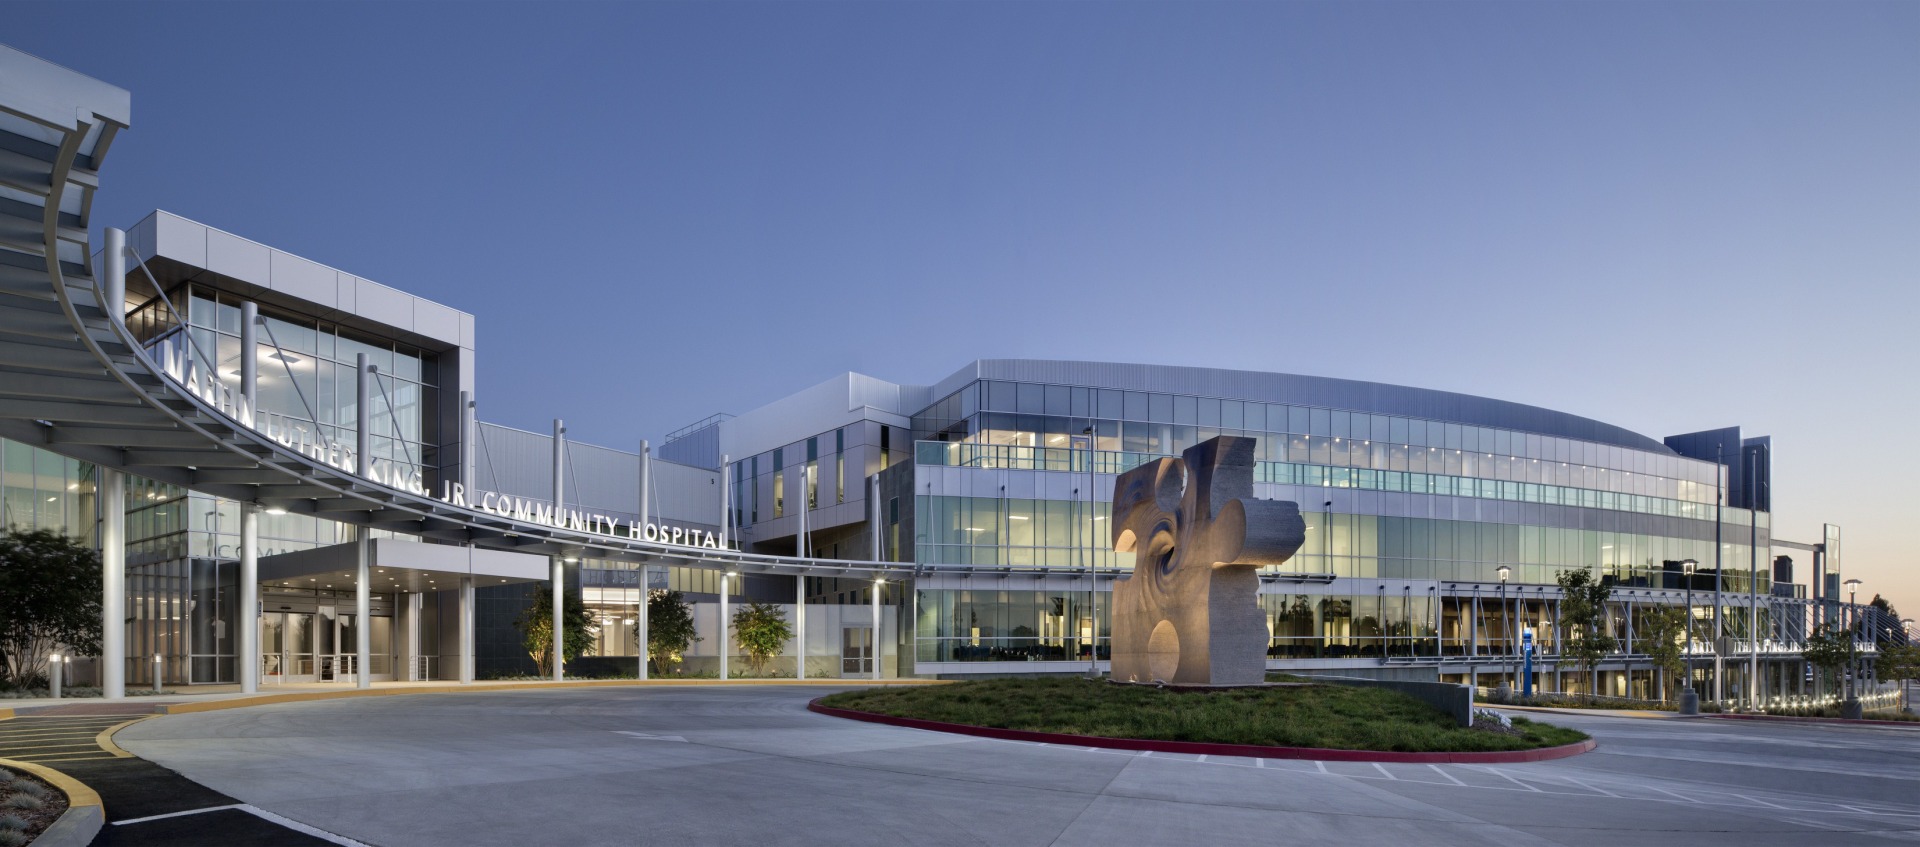 HMC Architects-Designed Martin Luther King, Jr. Community Hospital